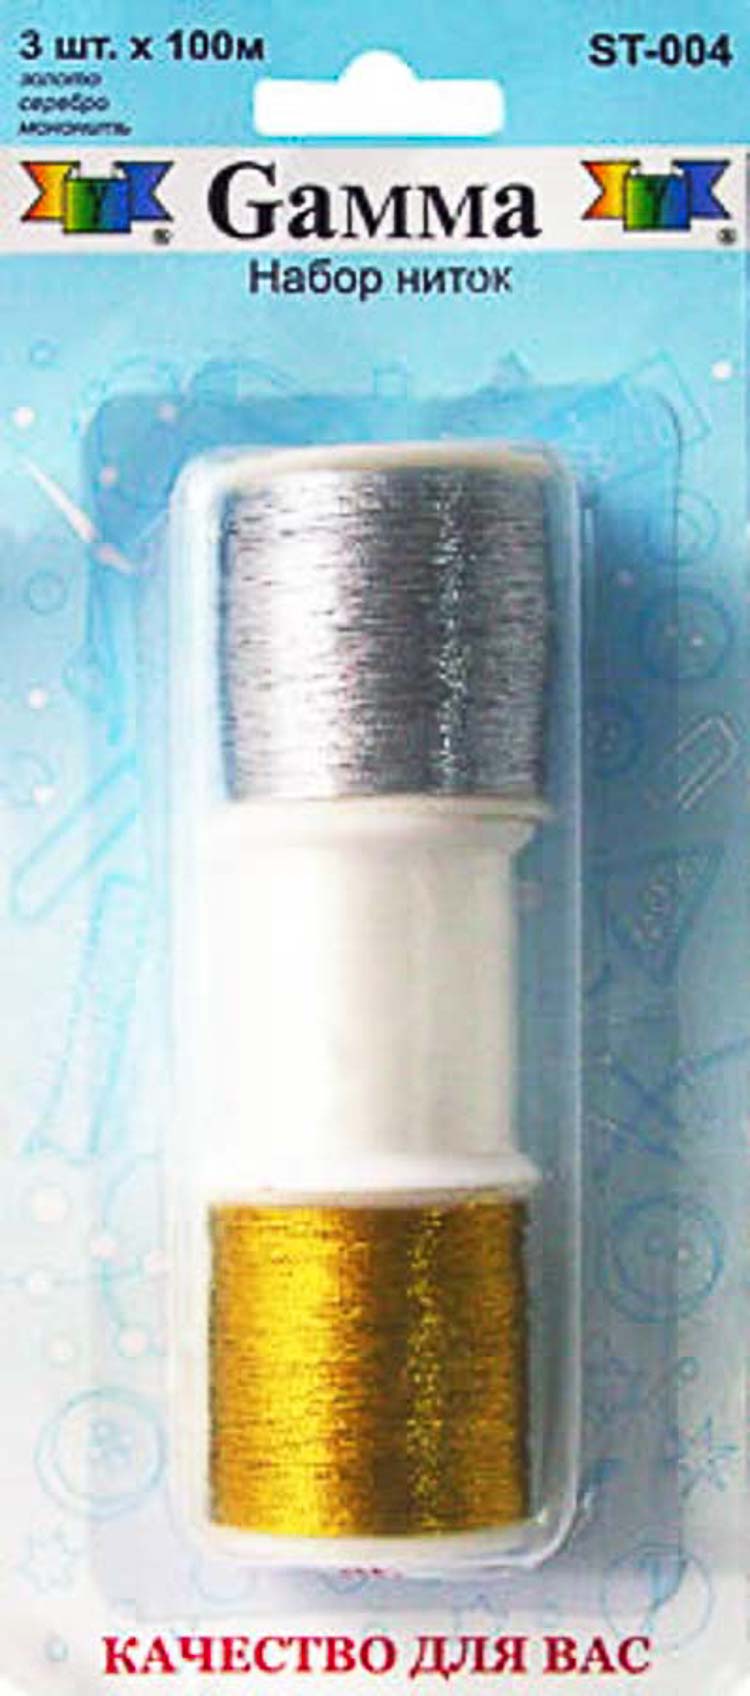 Набор ниток "Gamma" ST-004 (Золото, серебро, мононить)х100м, в блистере